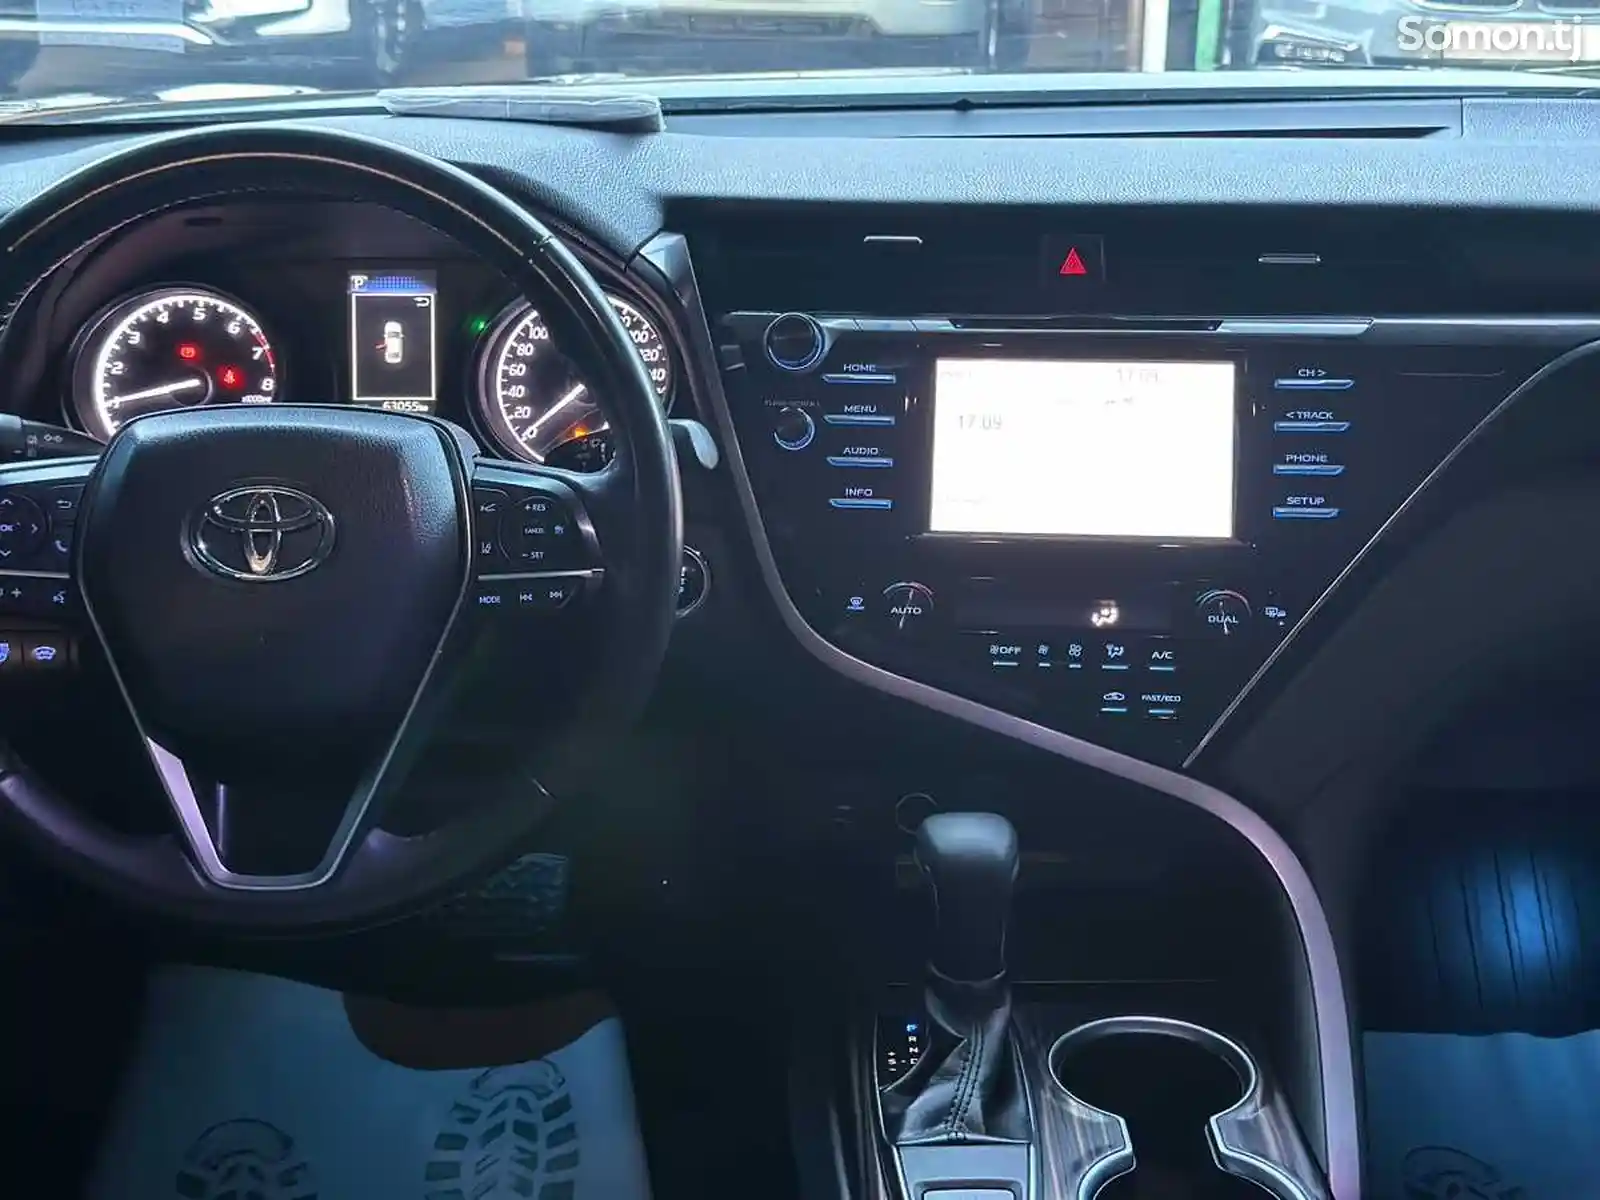 Toyota Camry, 2019-5